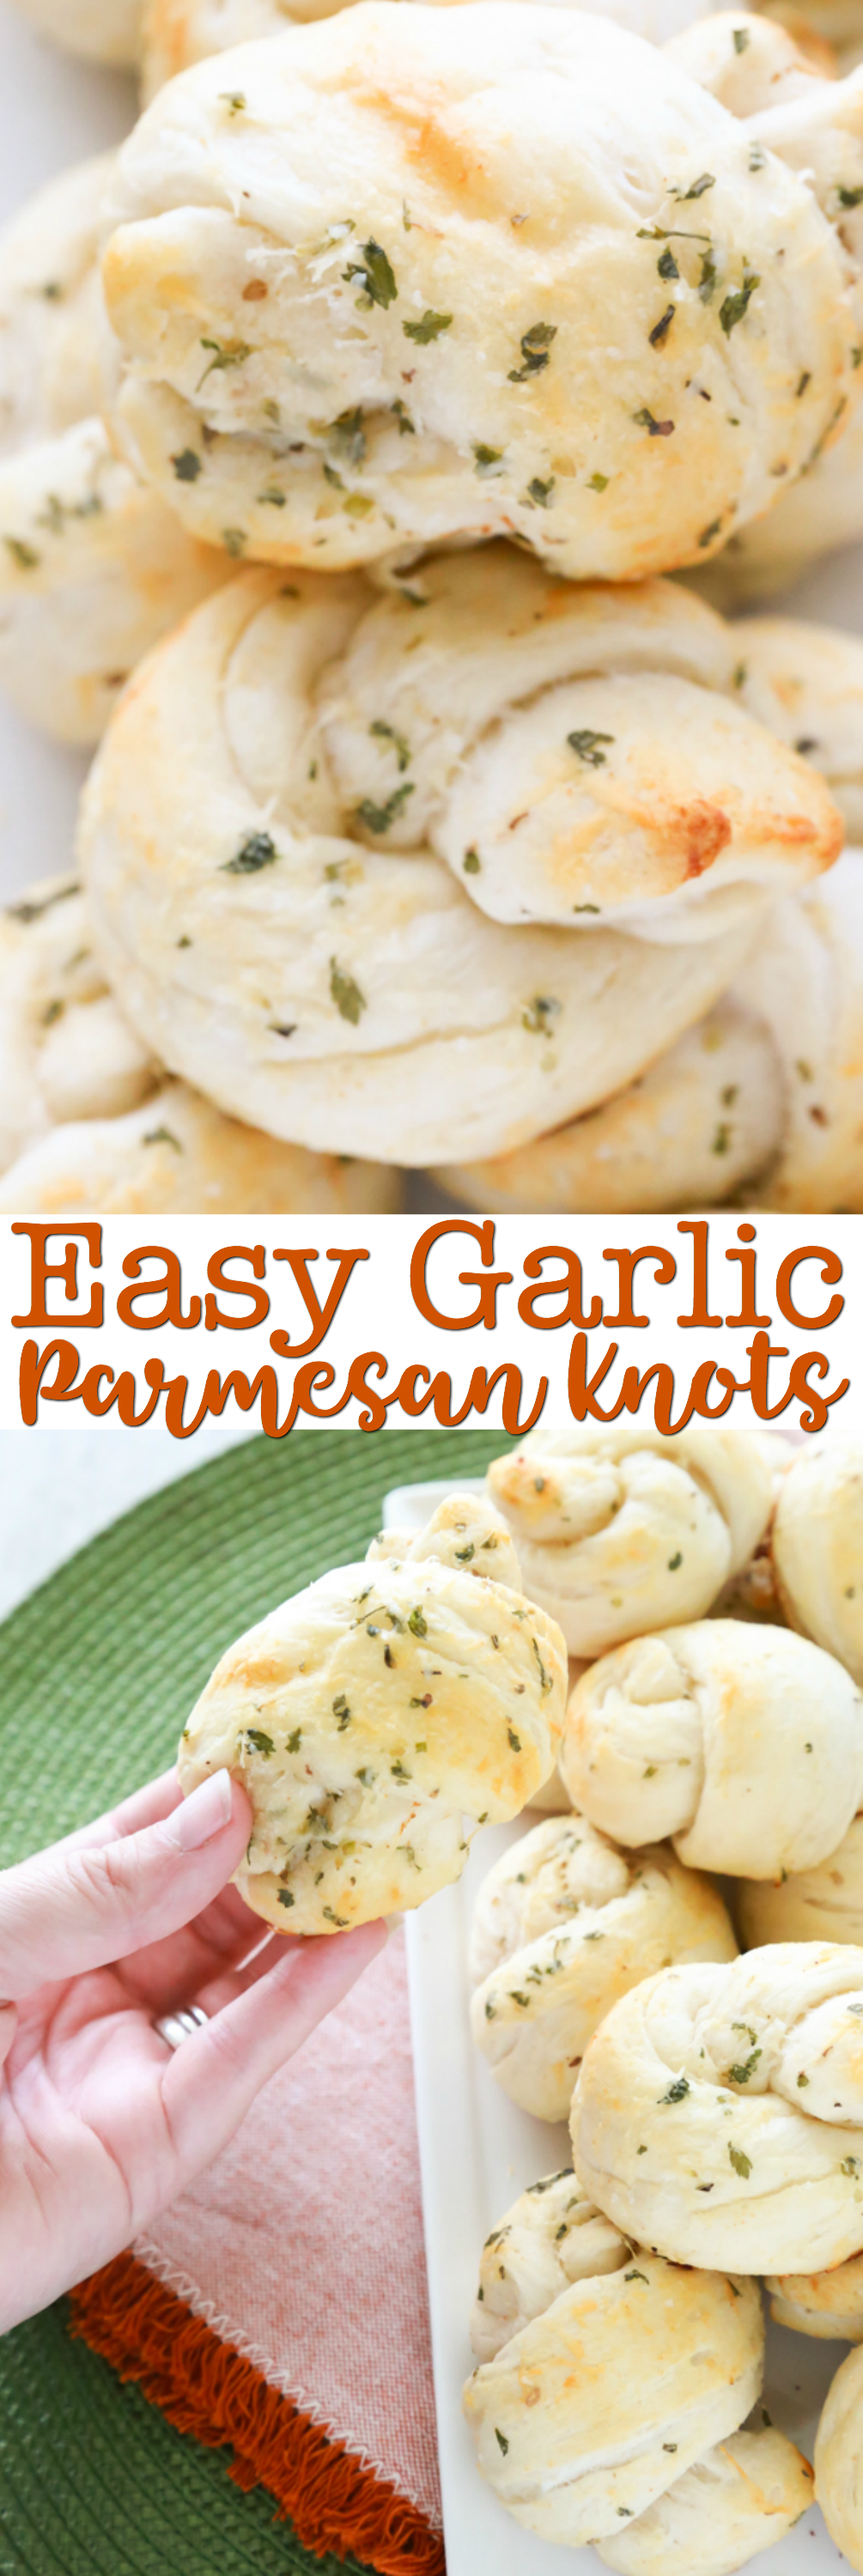 easy garlic parmesan kots